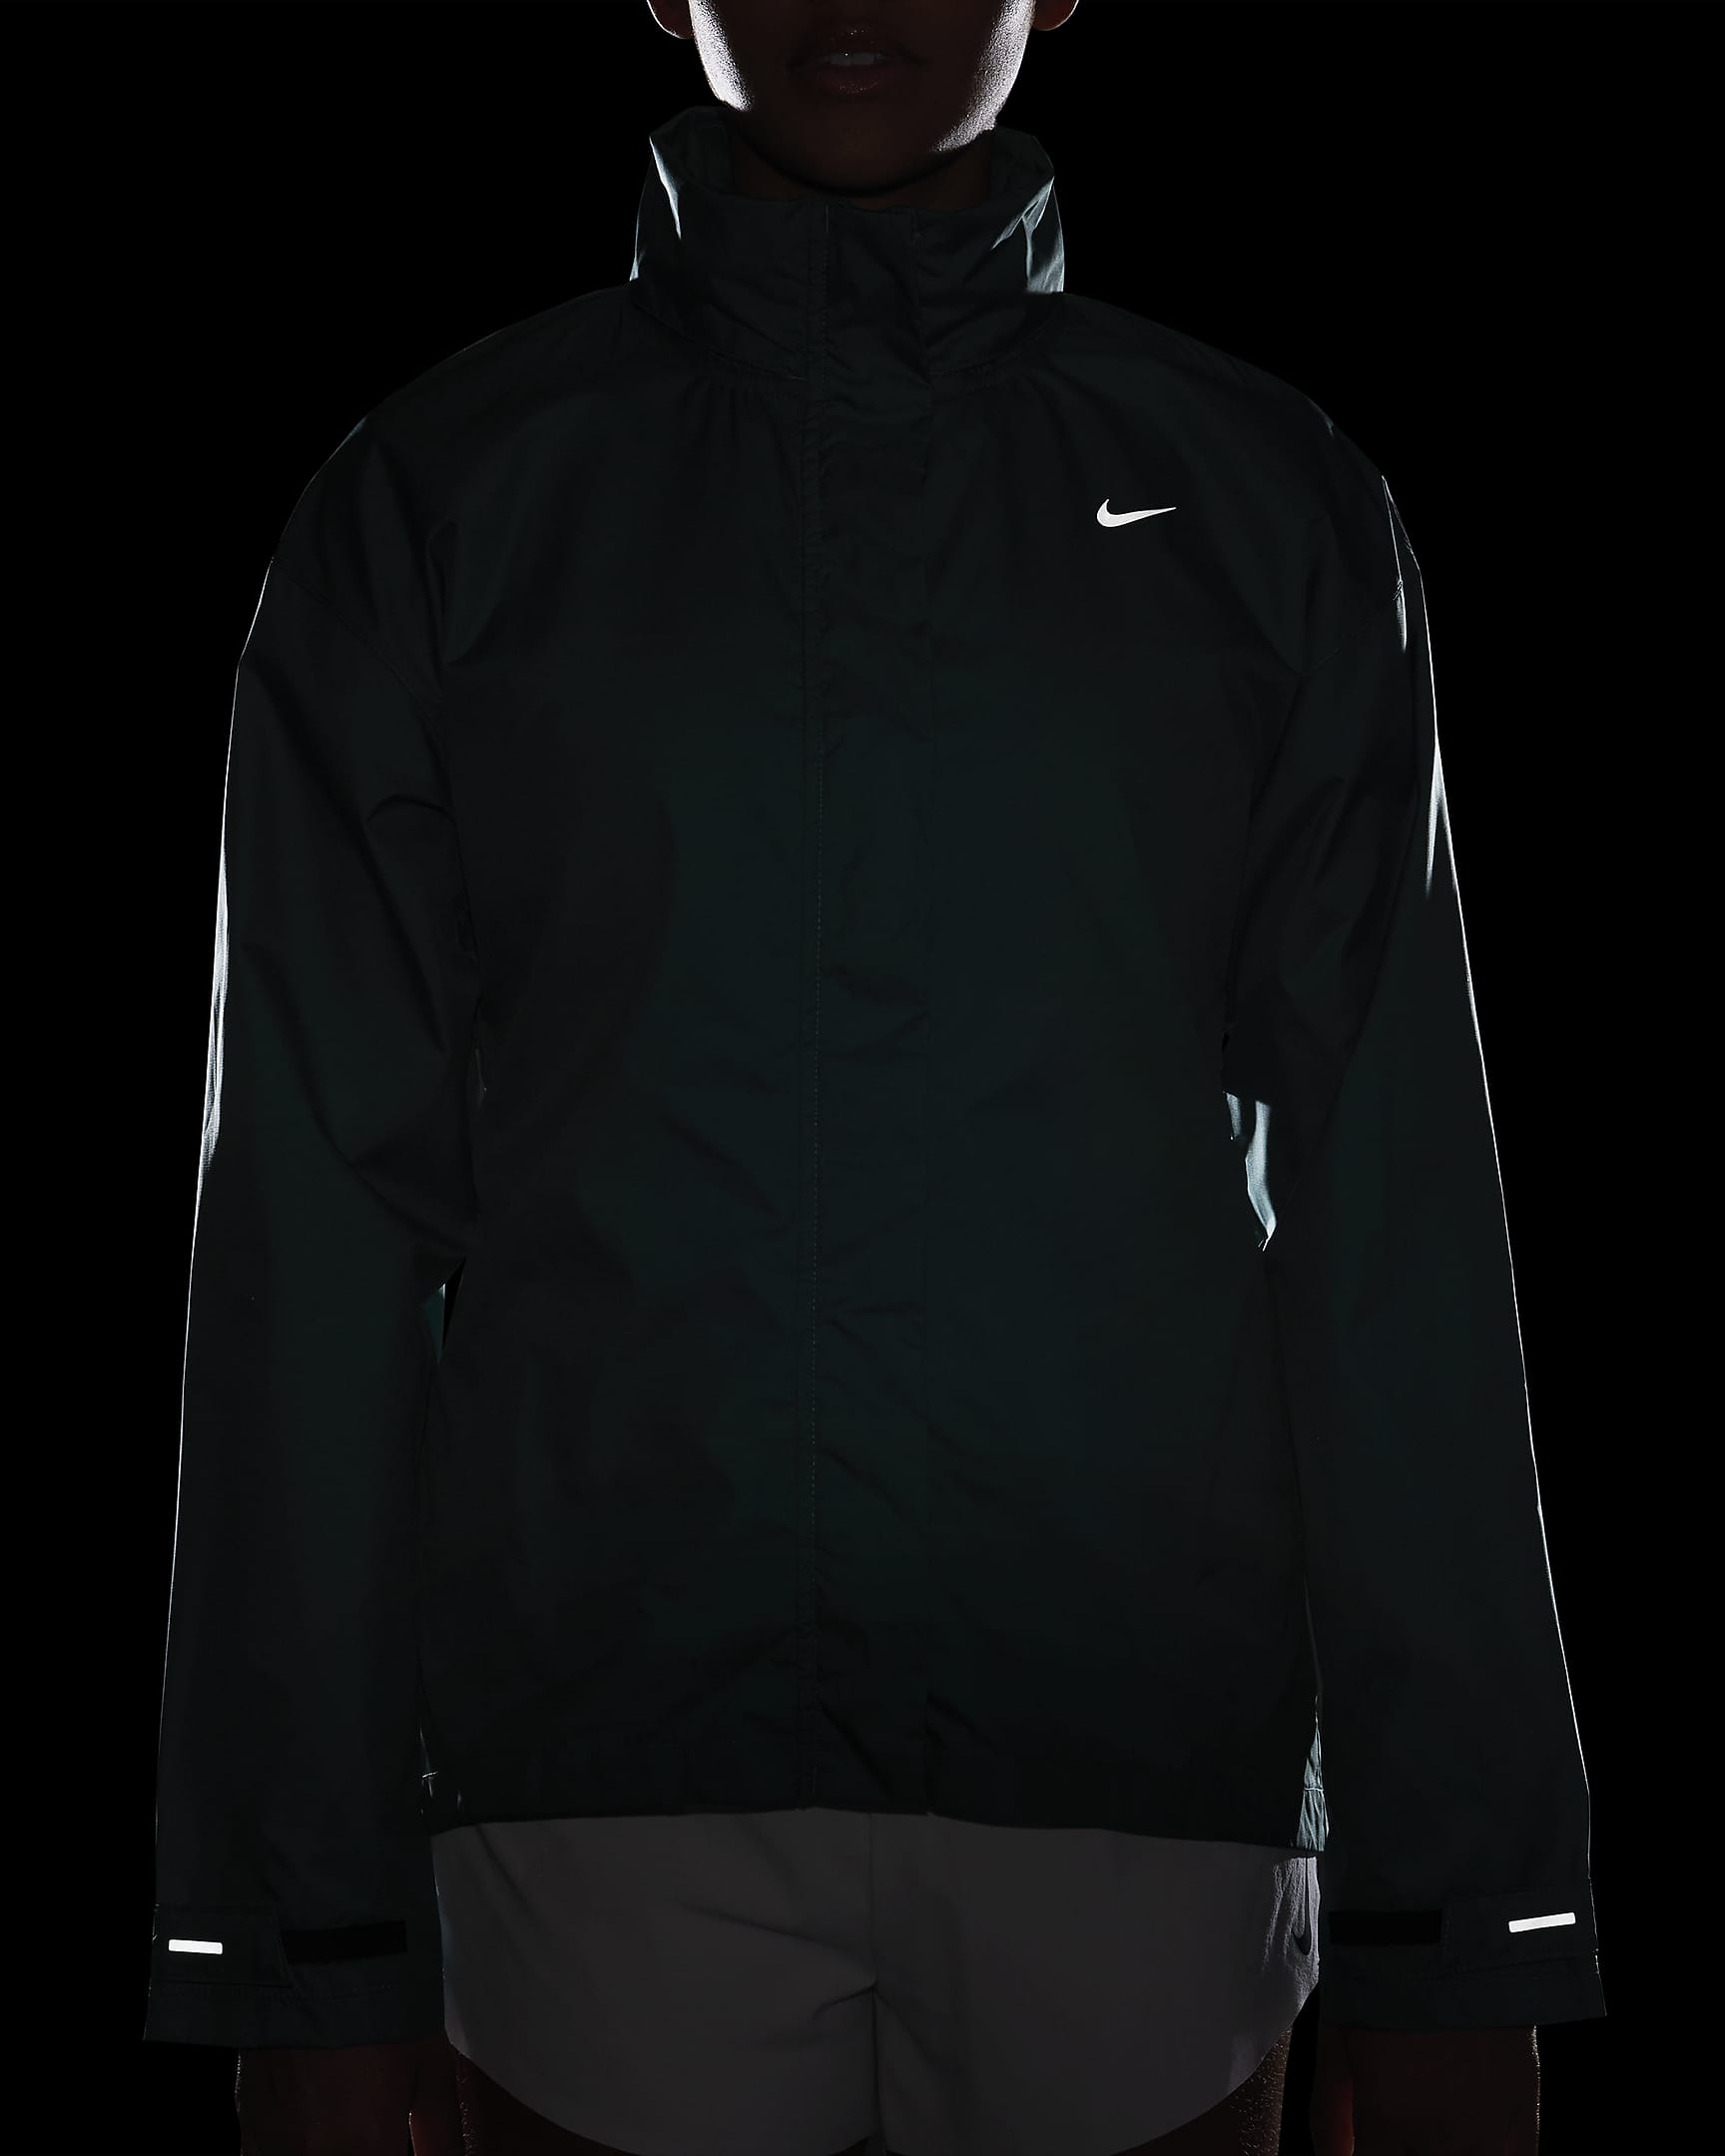 Nike Fast Repel Women's Running Jacket - Bicoastal/Black